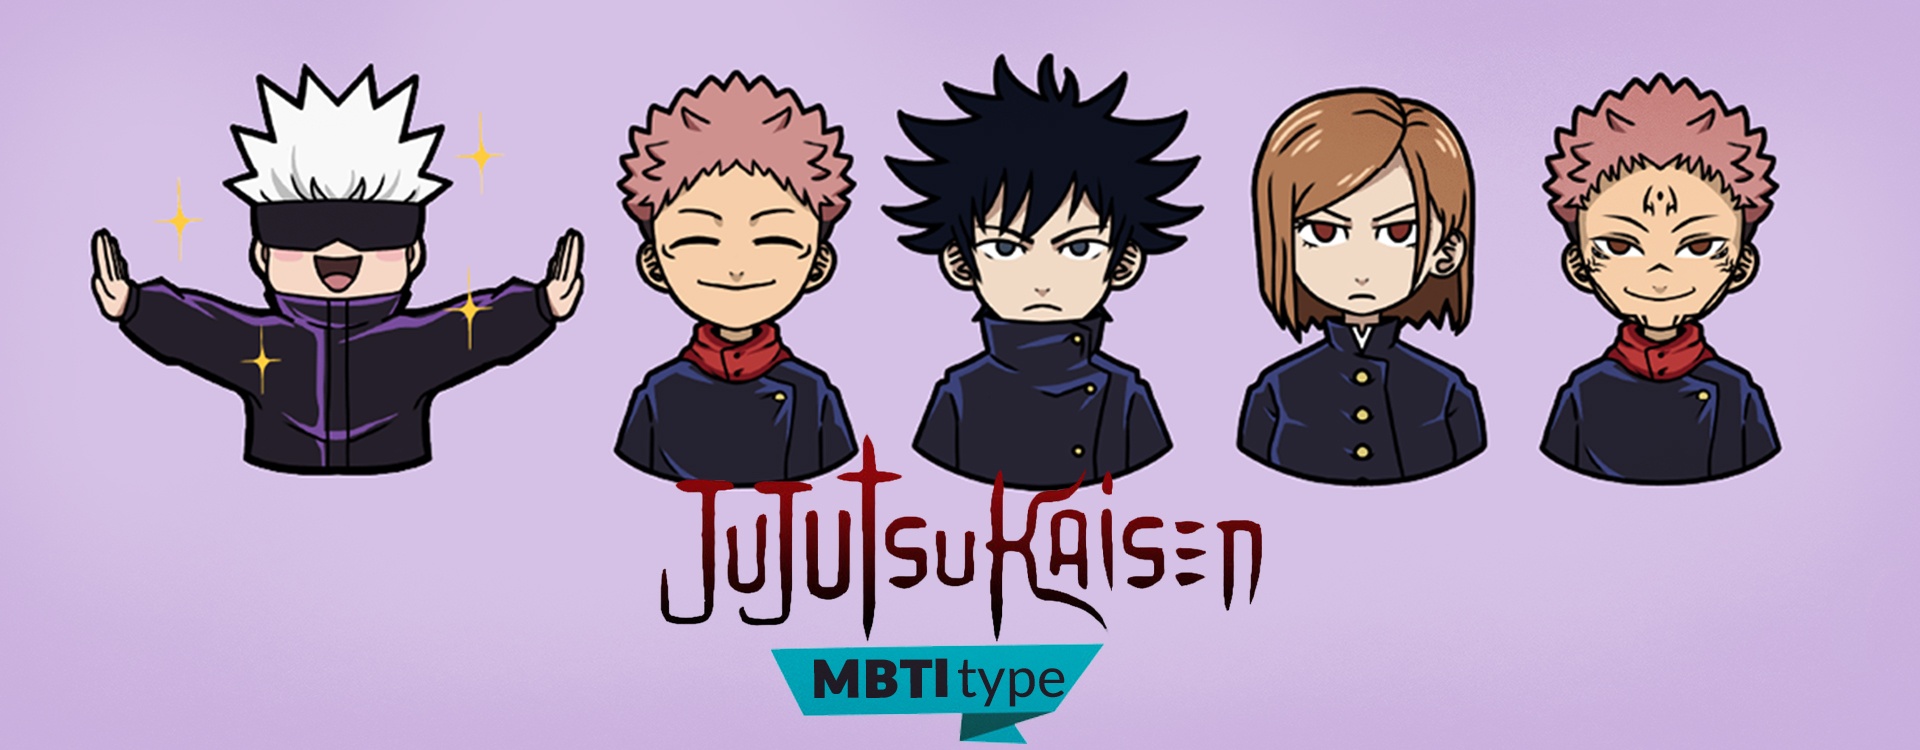 MBTI of characters in Jujutsu Kaisen 